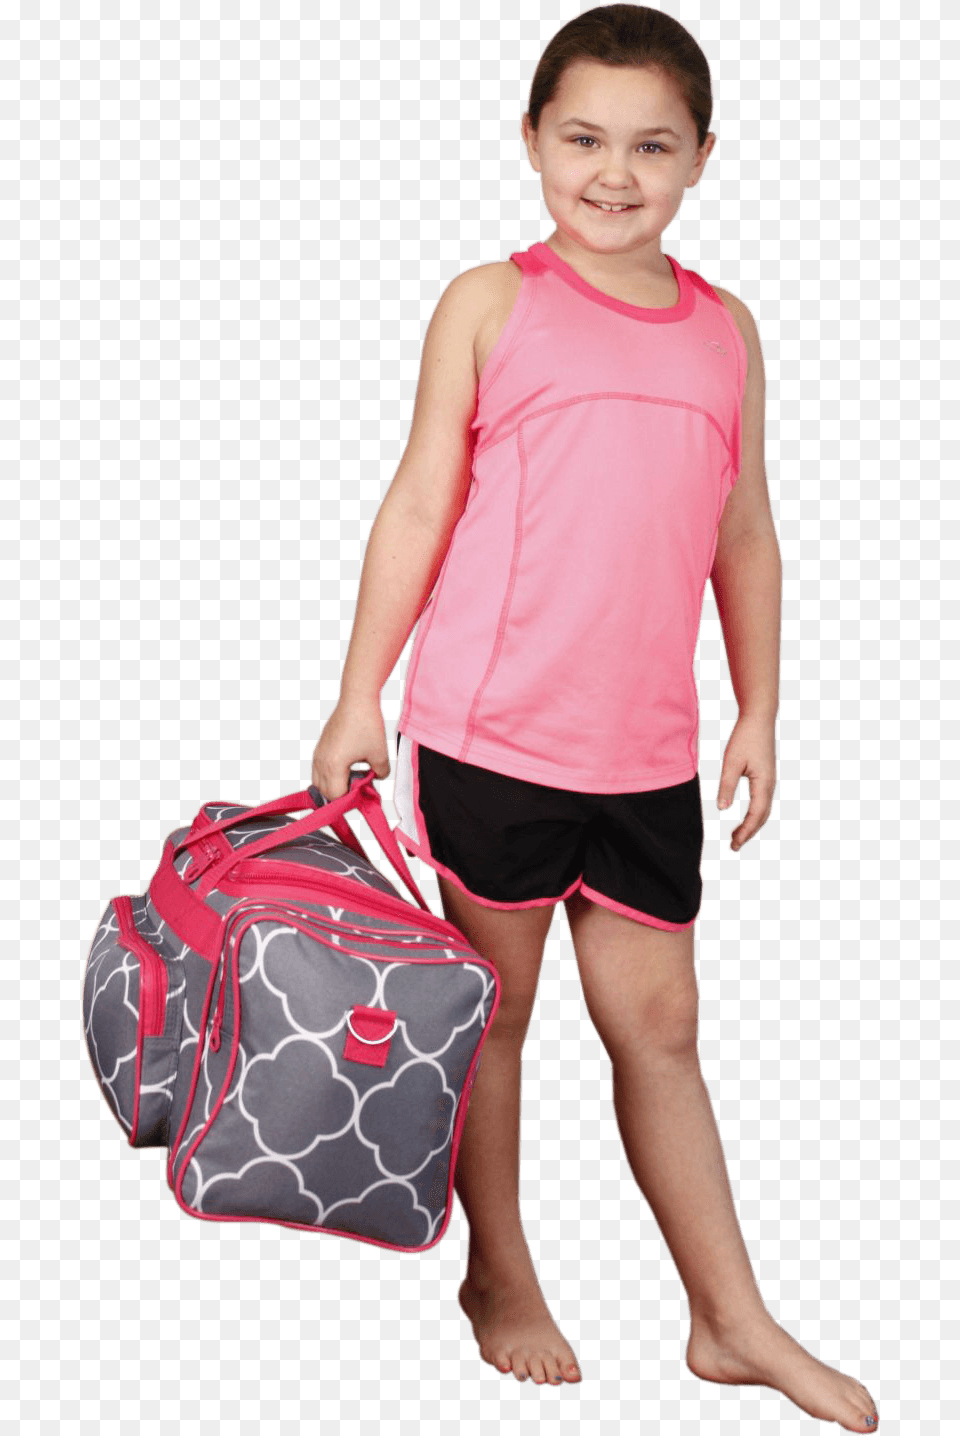 Hot Preteen Hot Preteen Kid Holding Handbag, Shorts, Clothing, Person, Male Png Image